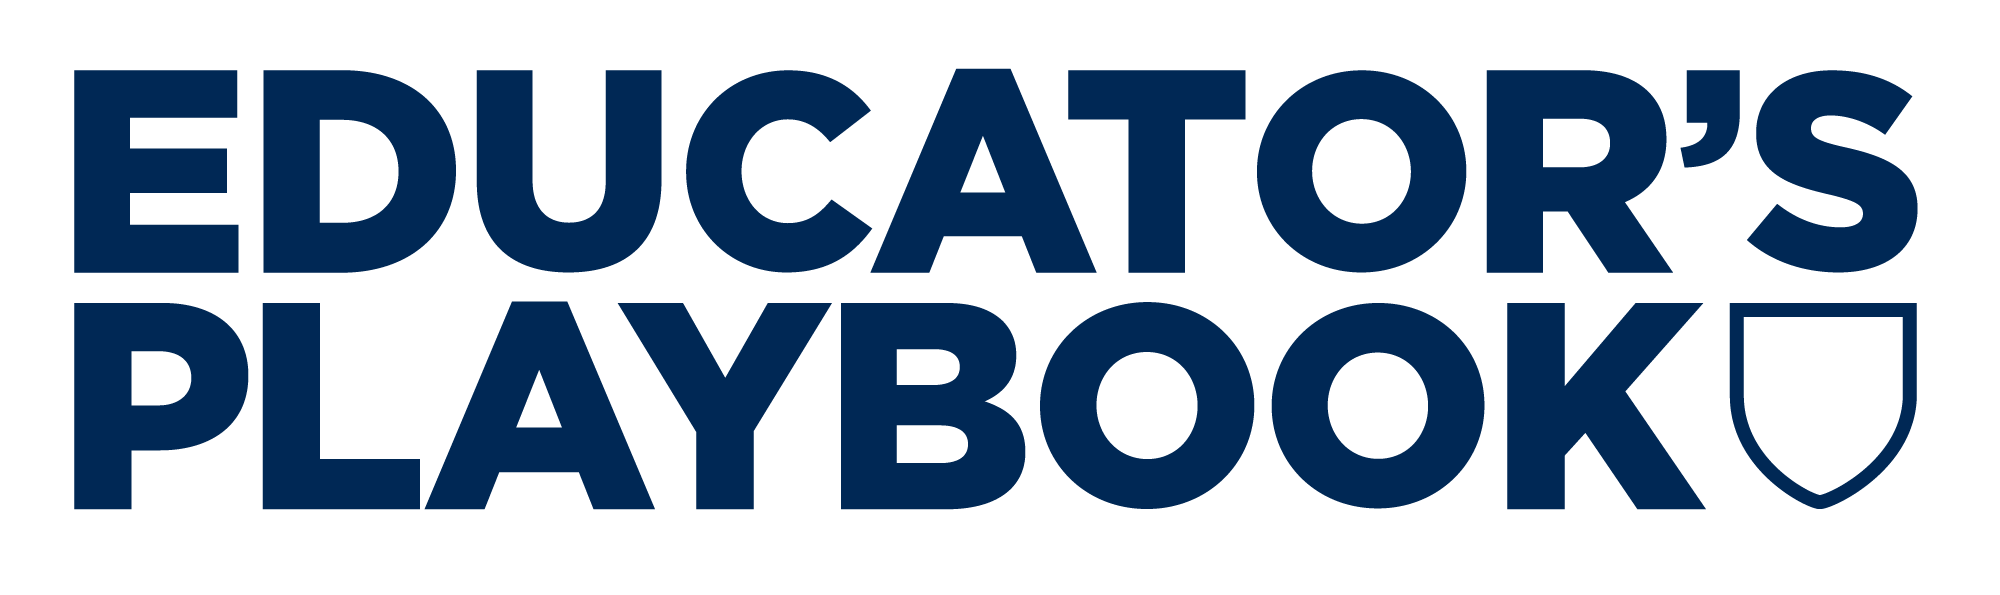 Educator's Playbook Logo